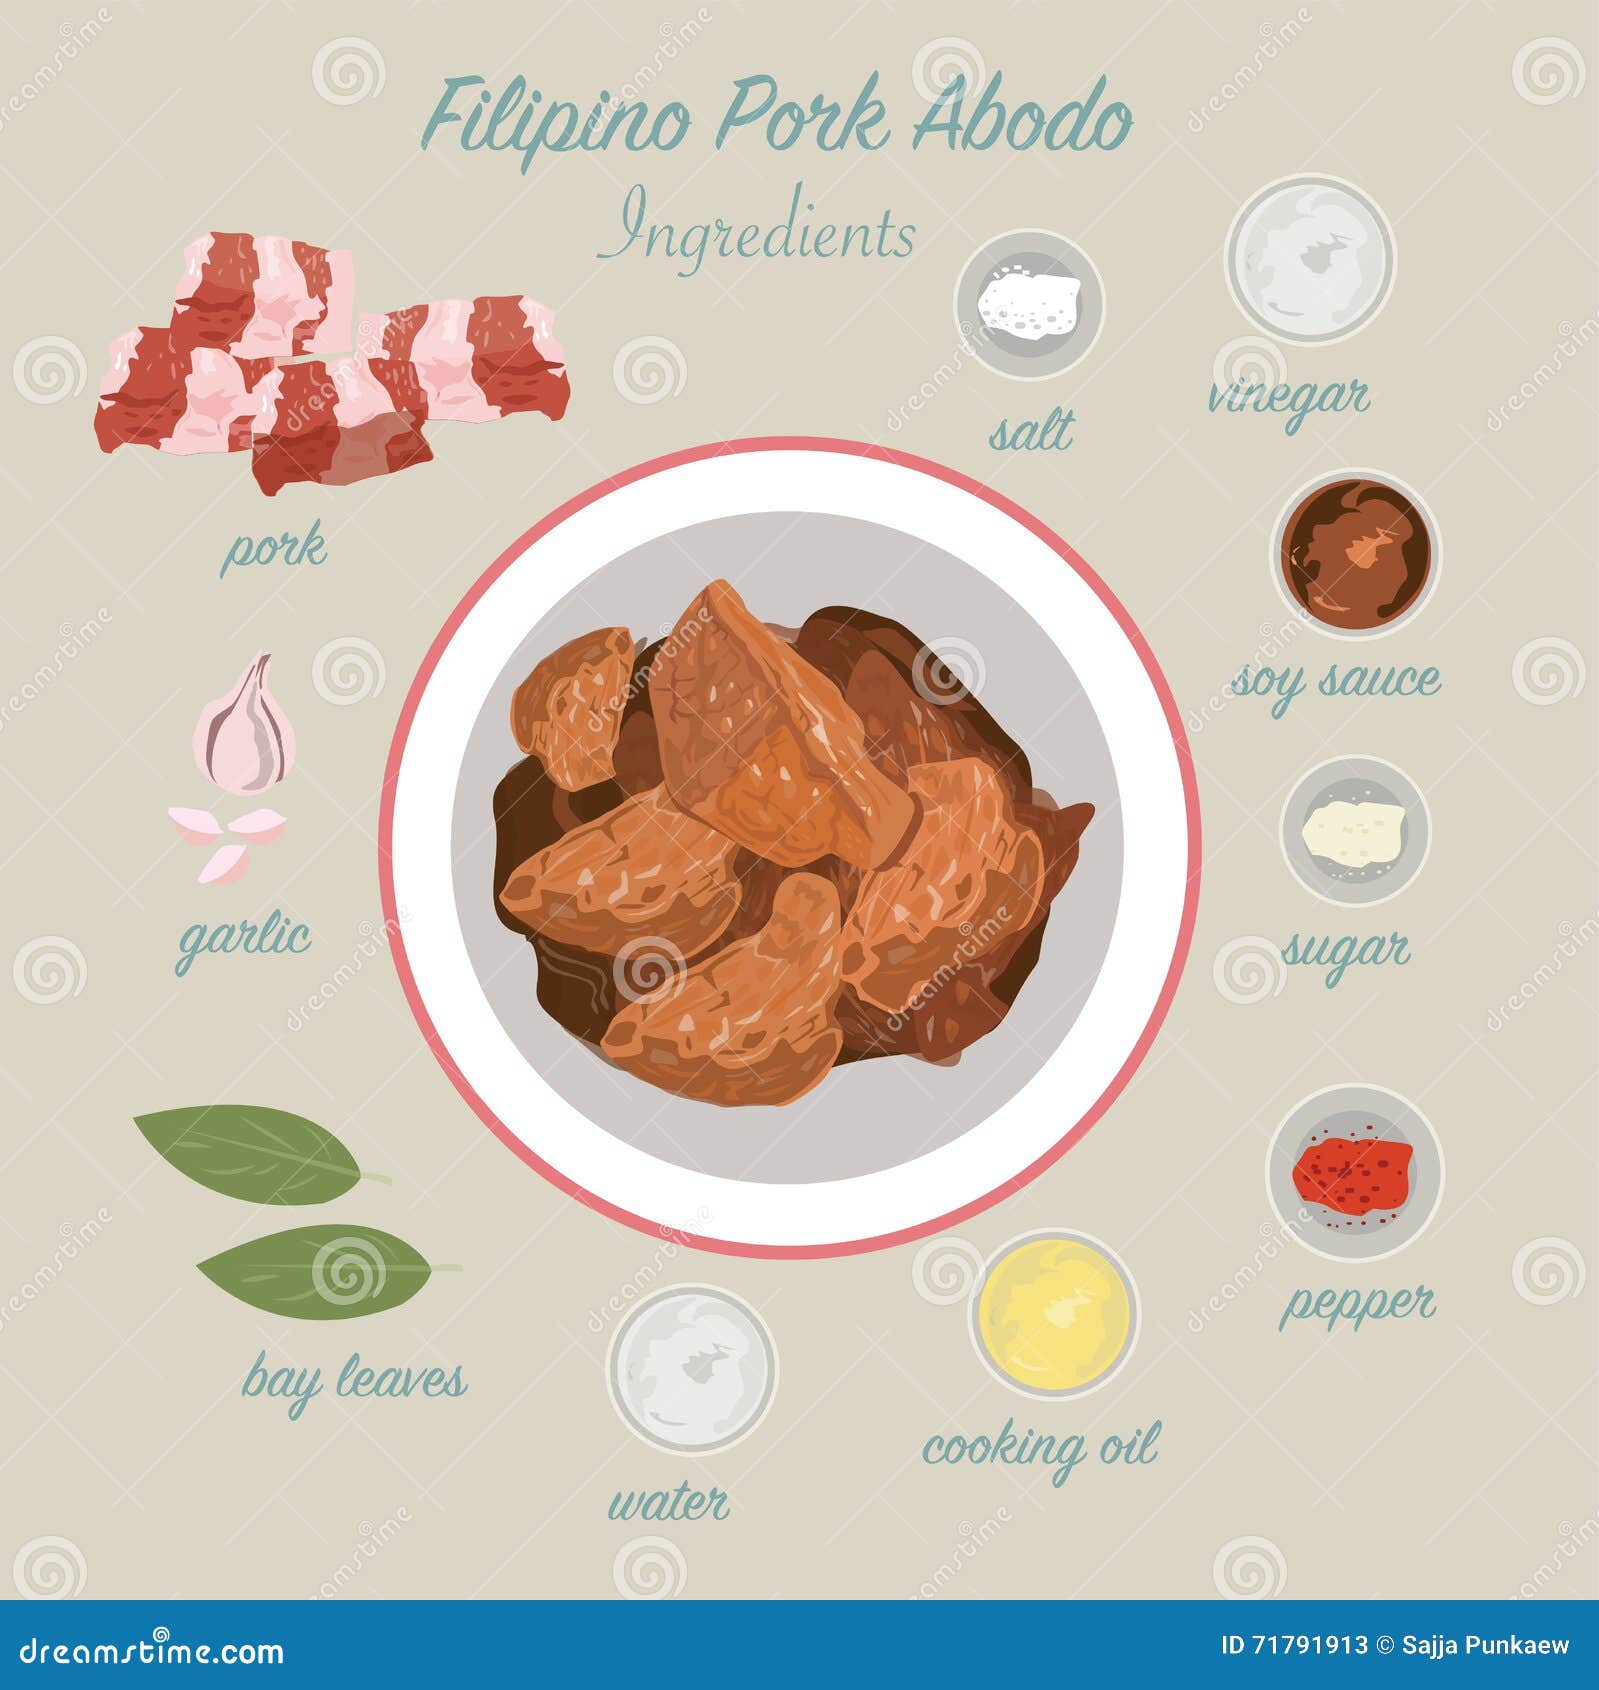 philippines food.pork adobo